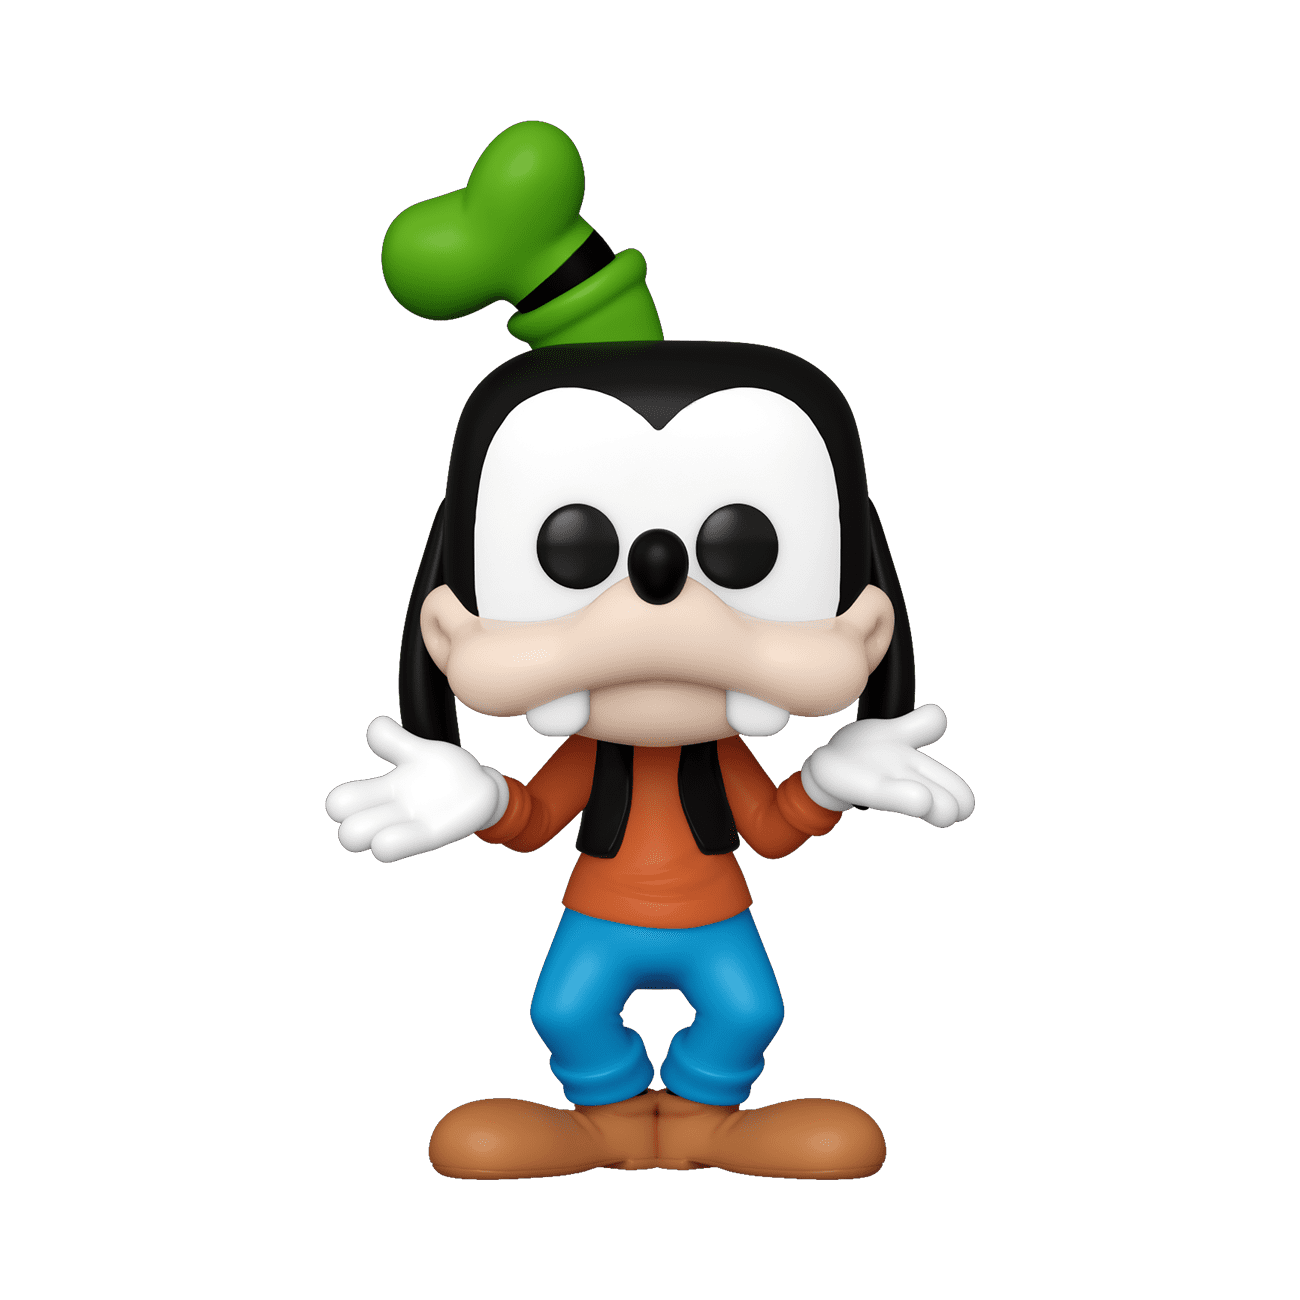 Funko Pop! Disney Classics: Mickey and Friends - Donald Duck